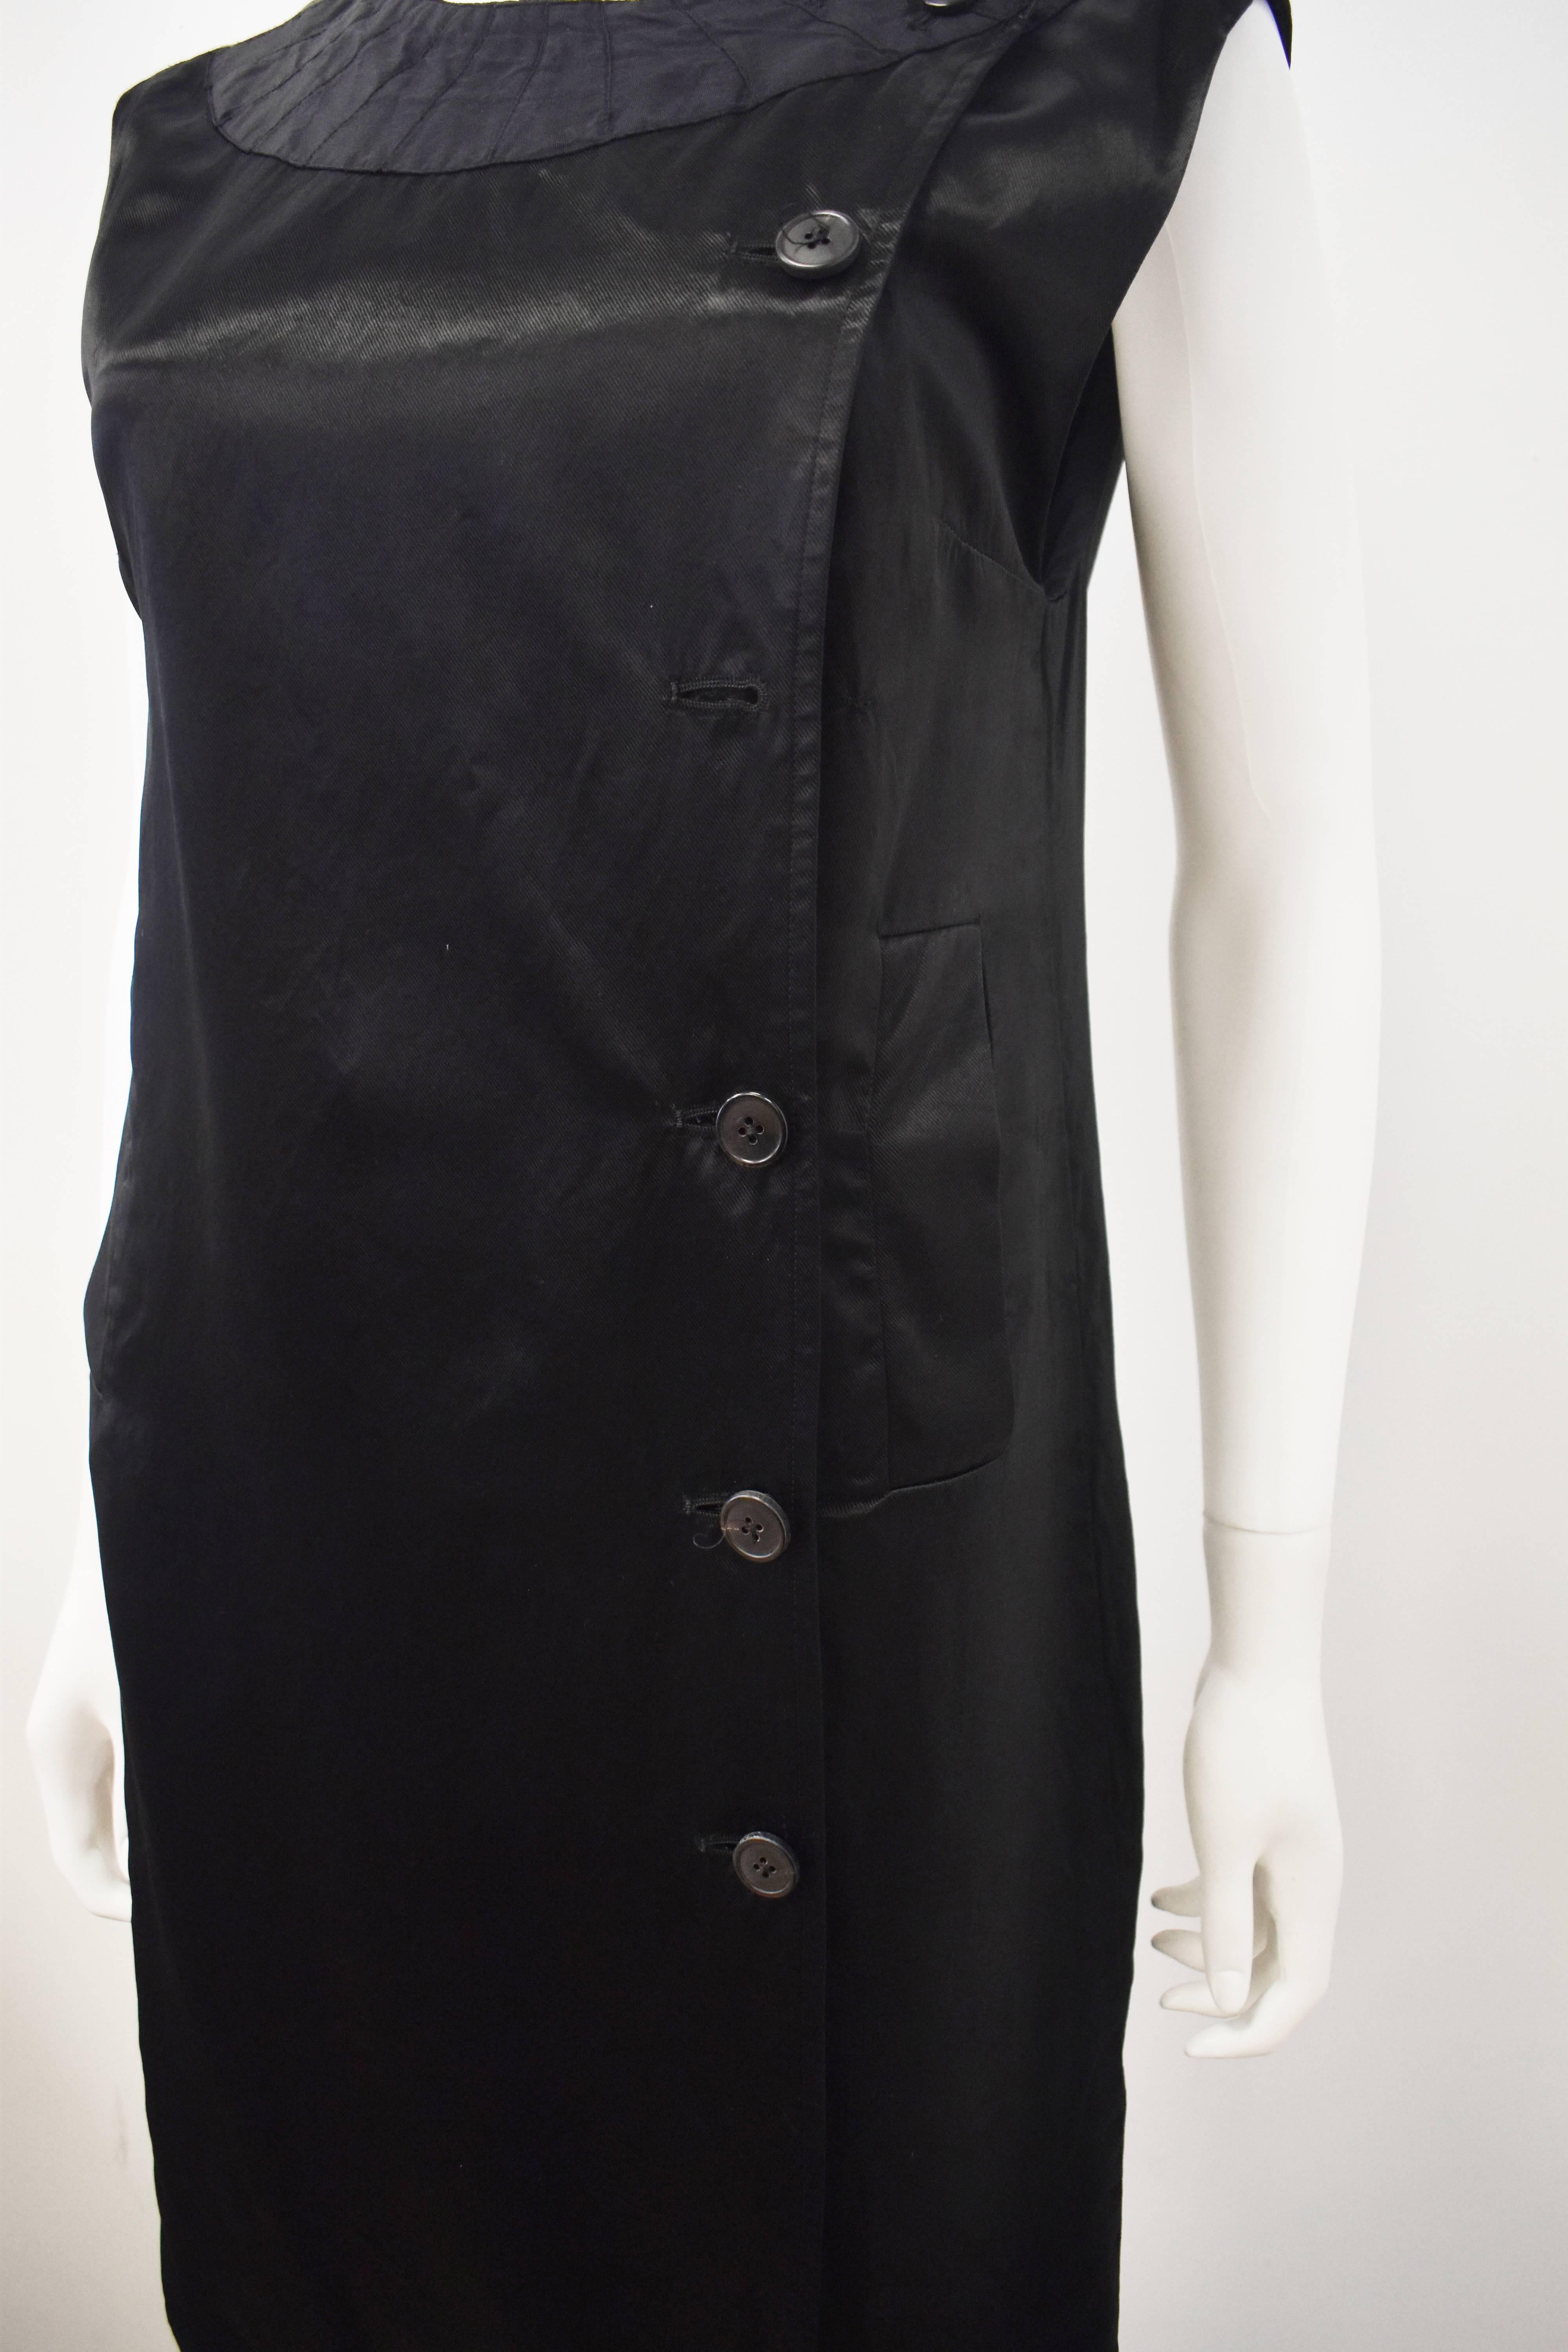 Dries van Noten black button down dress For Sale 2